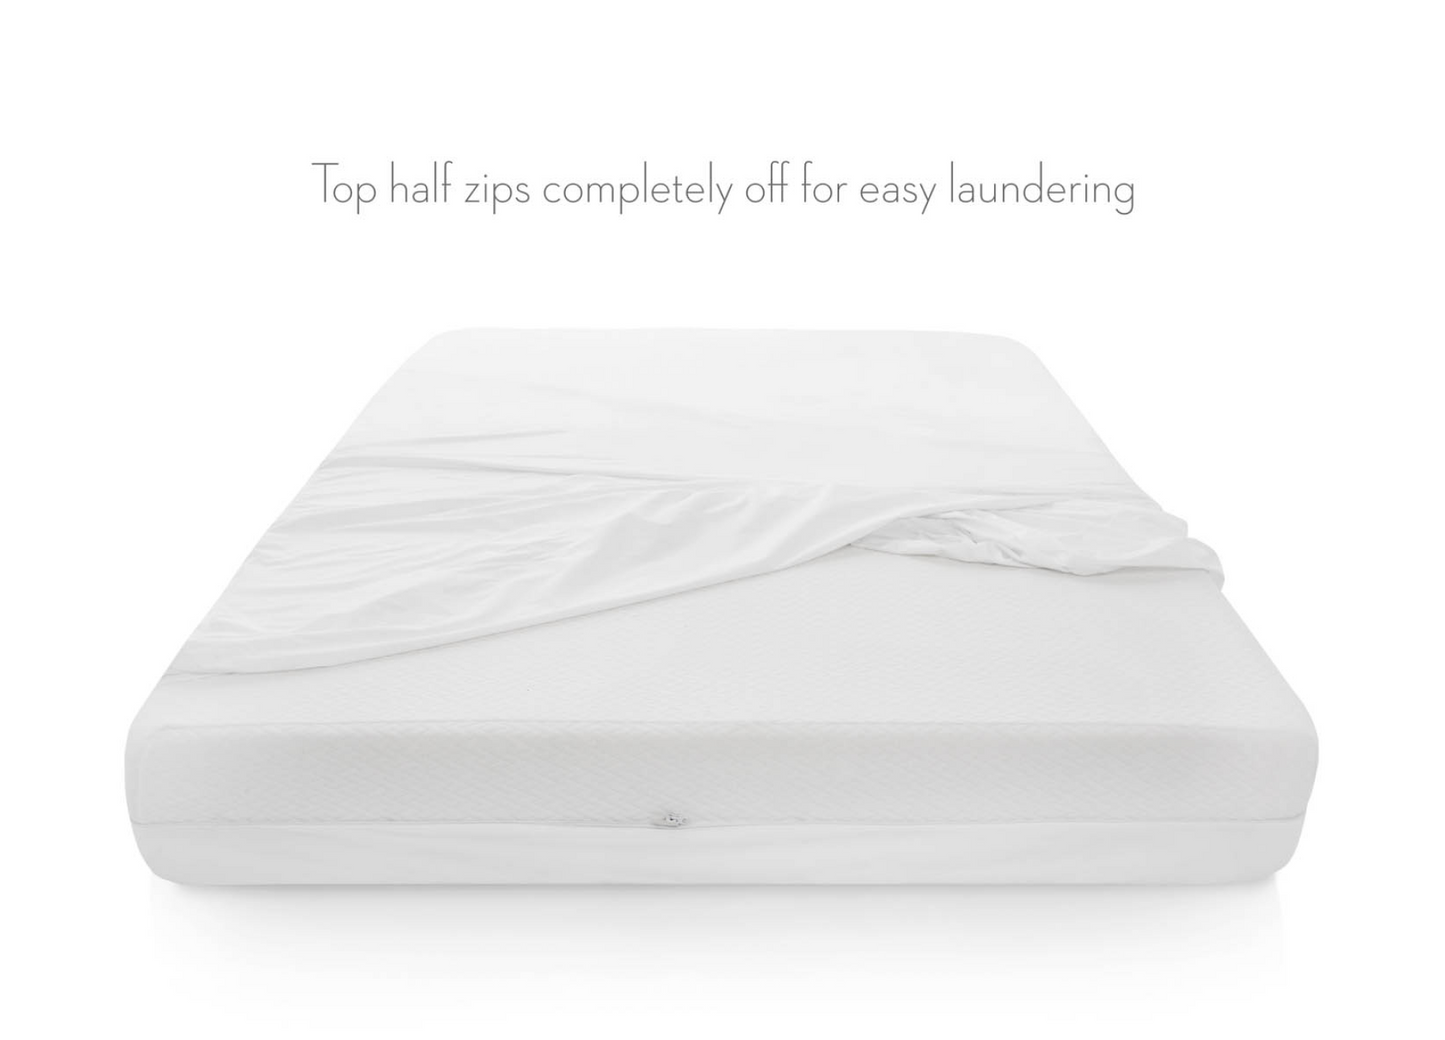 Encase HD mattress protector being unzipped for washing - Mattress King